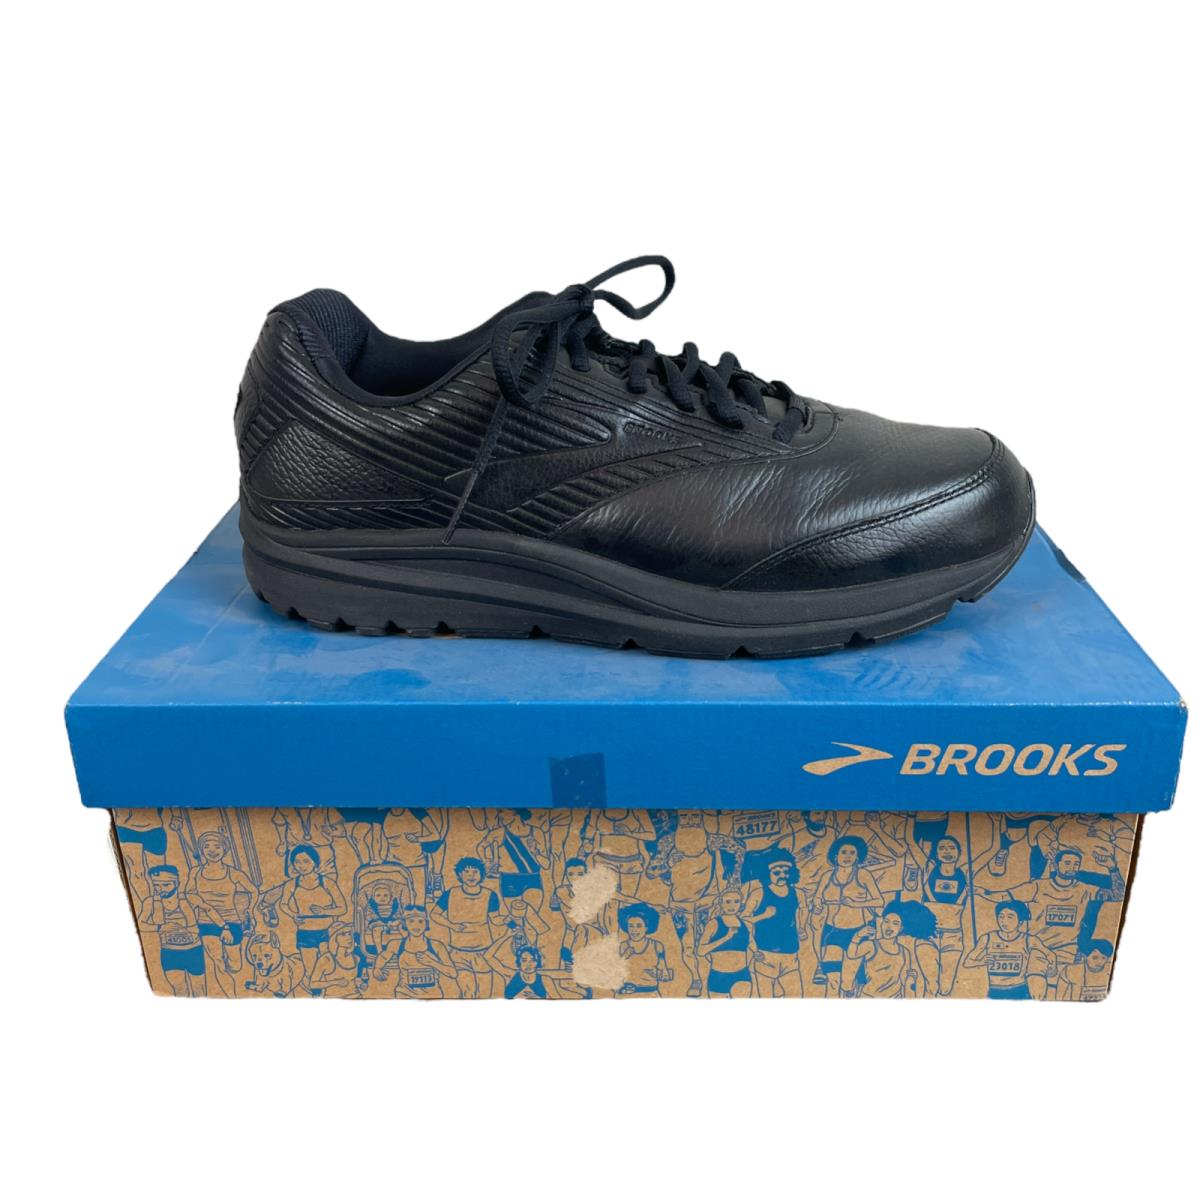 Brooks Addiction Walker 2 Shoes Womens 11.5 Wide D Black Athletic